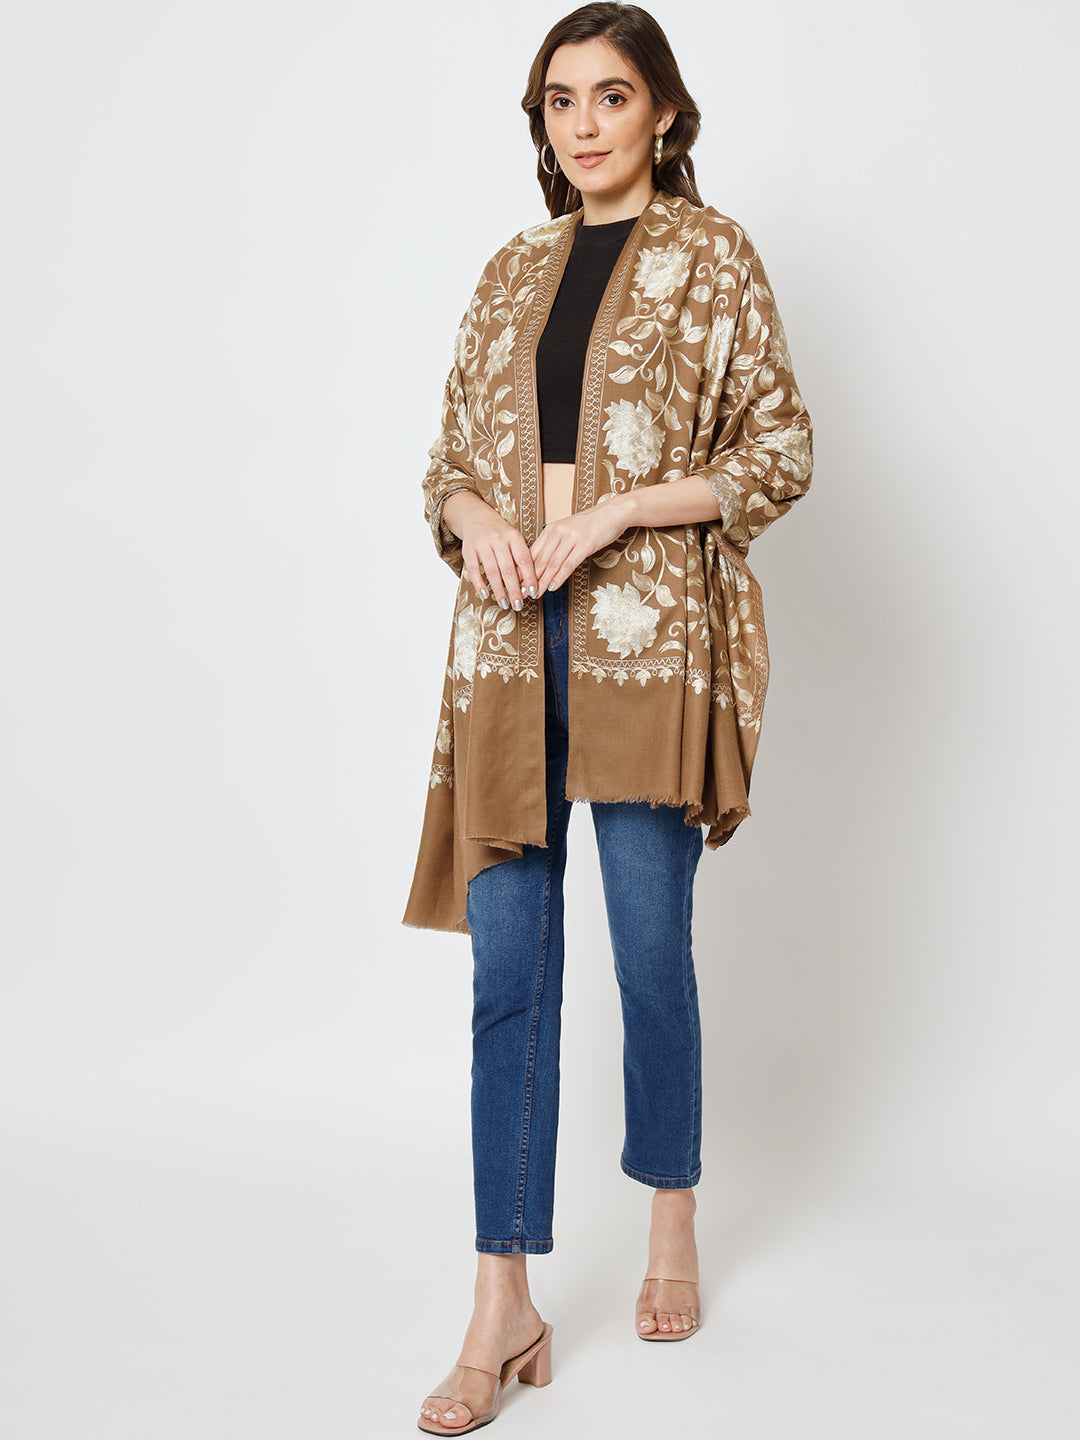 aari embroidery shawl, embroidered shawls online, brown shawl